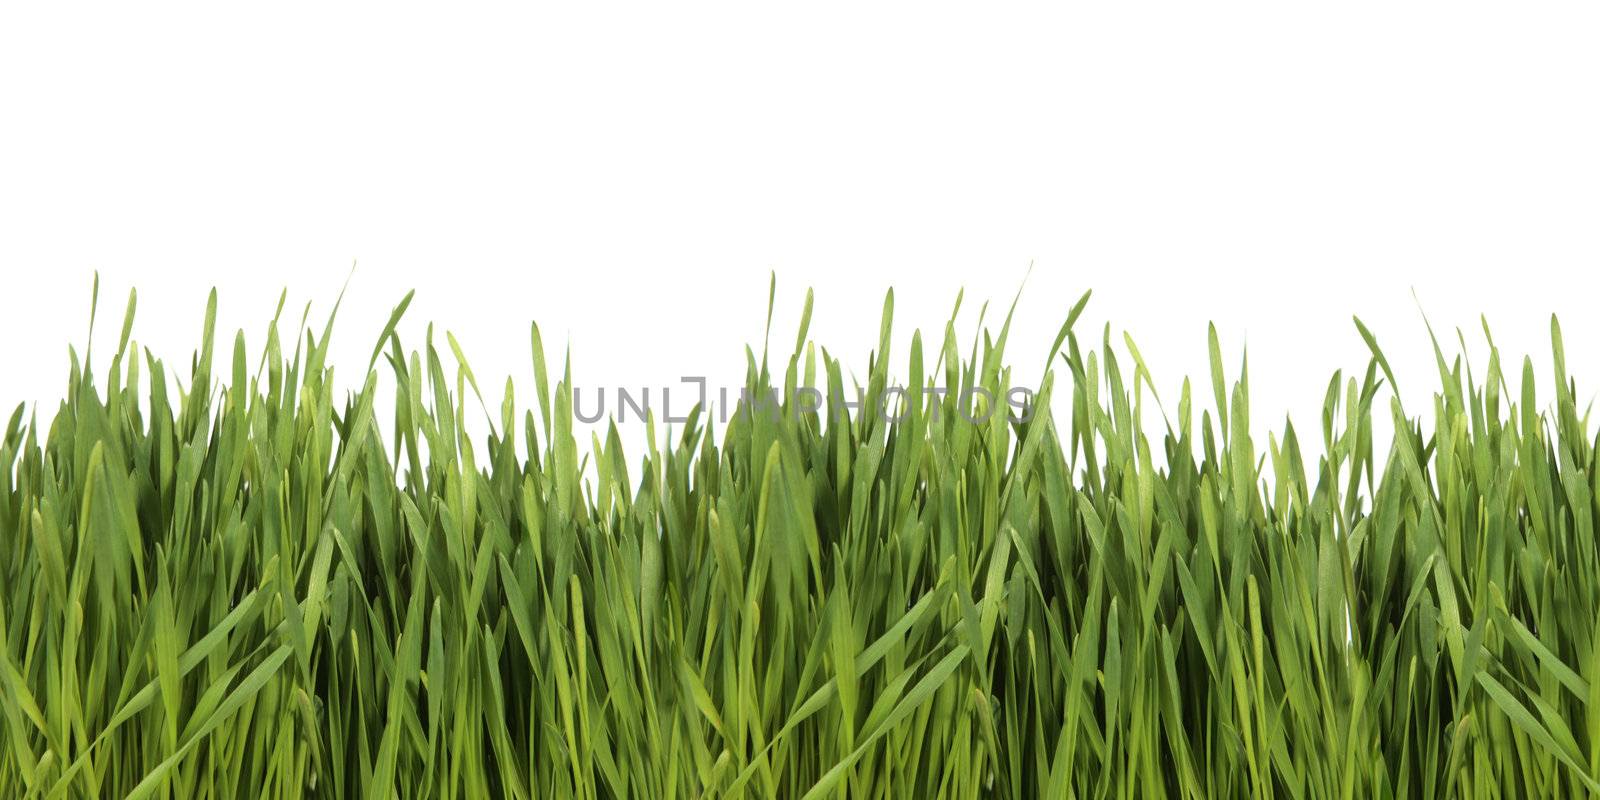 Green Grass on White Background by tobkatrina